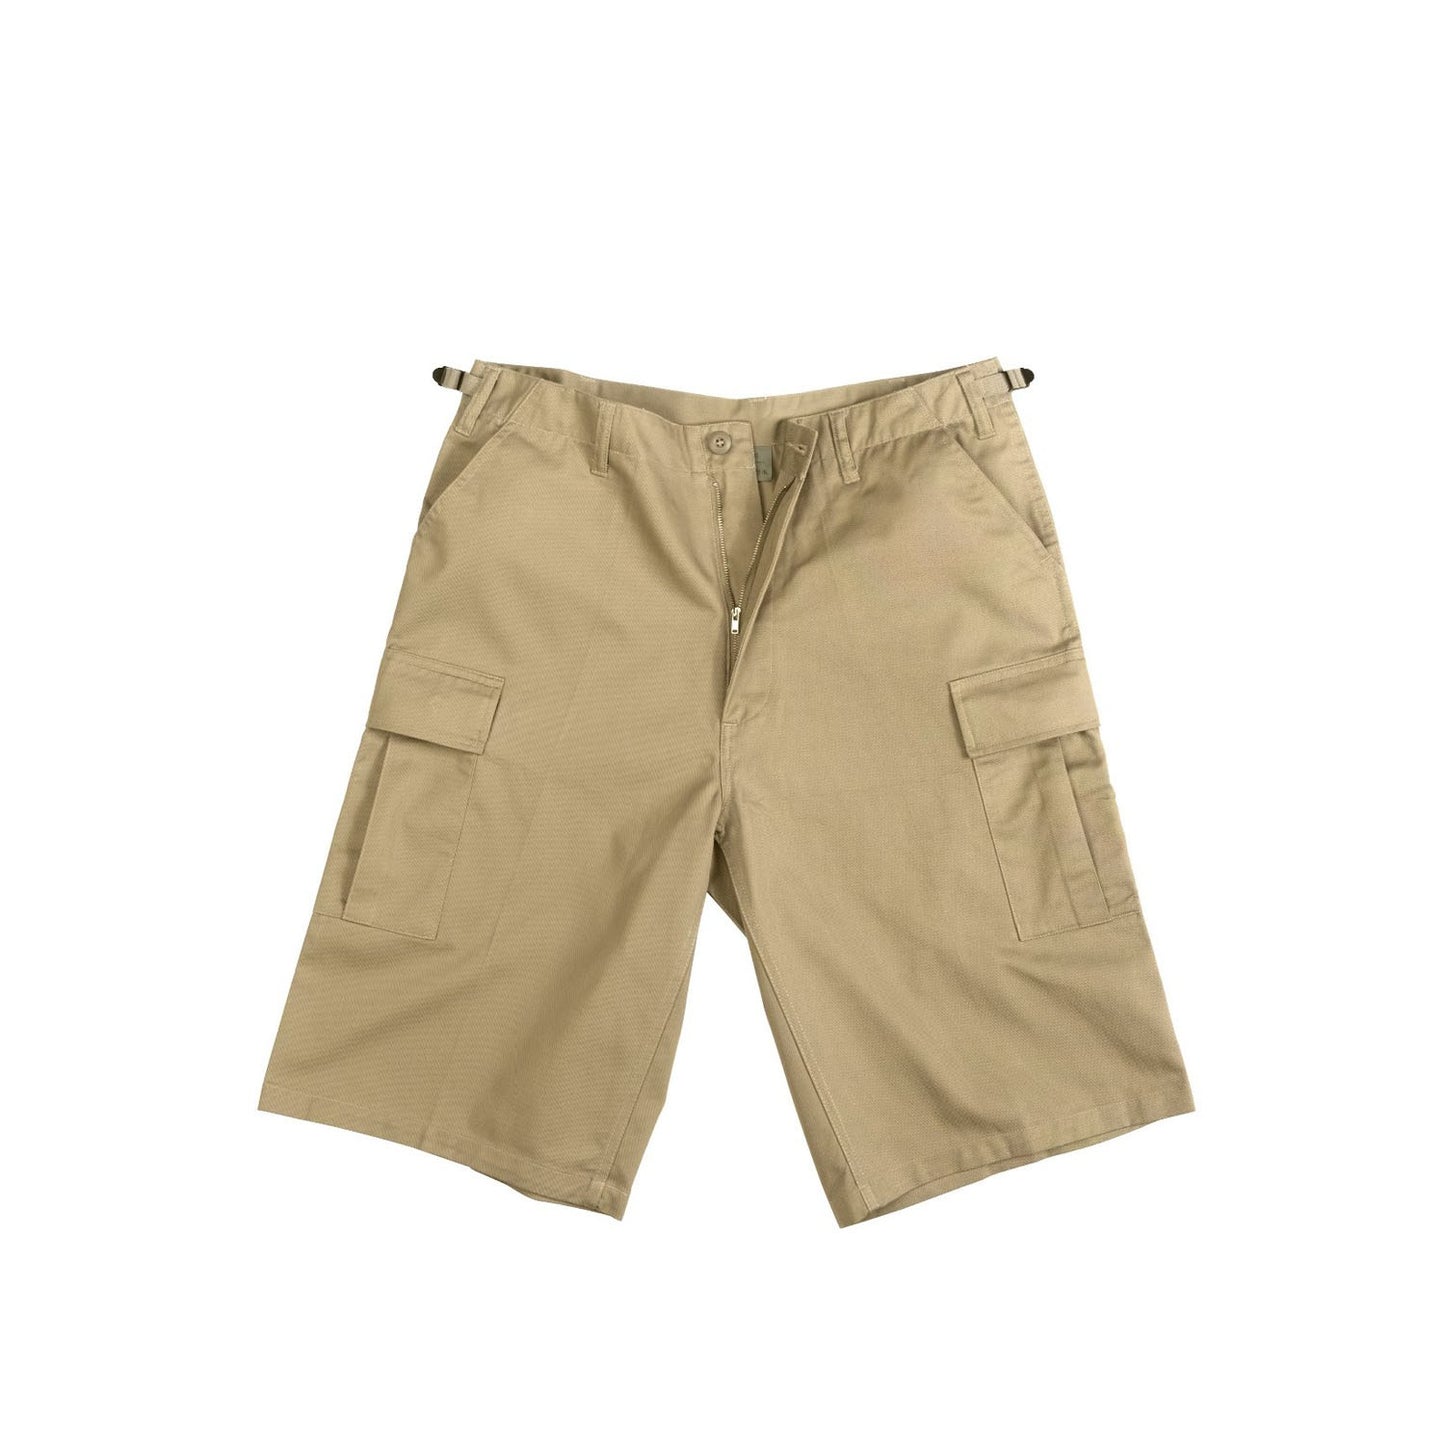 7968 - Long Length BDU Shorts